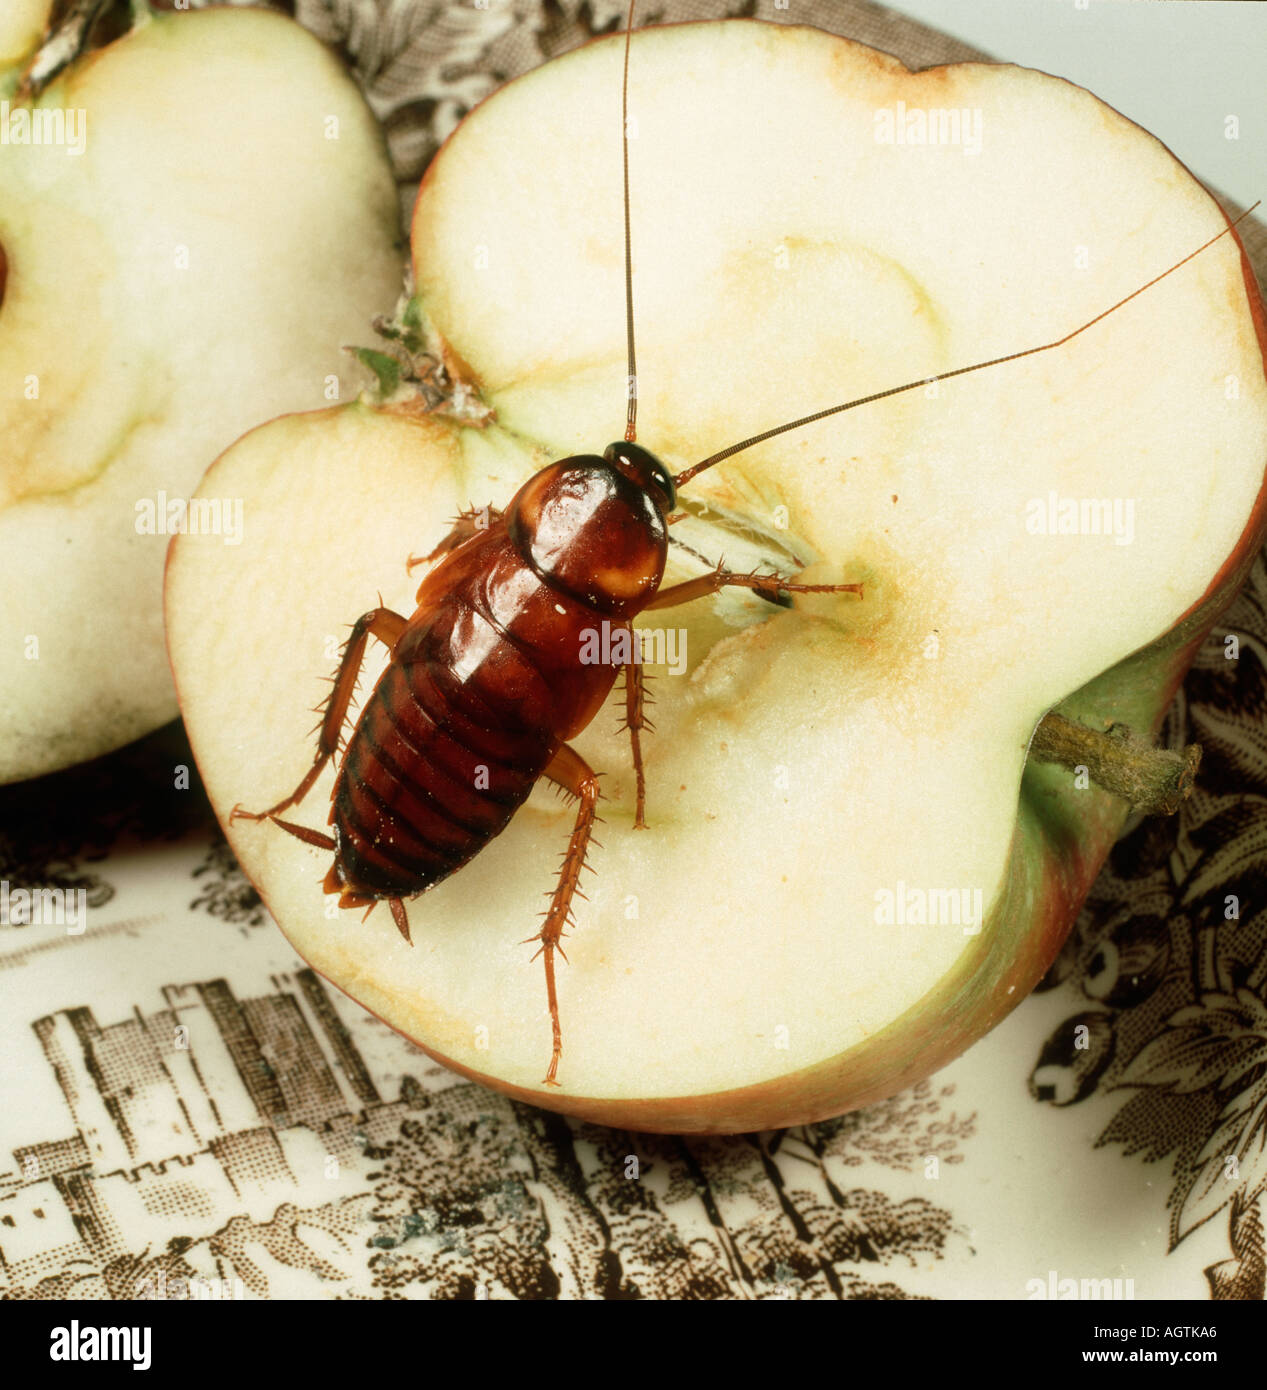 American Cockroach Periplenata americana nymph on an apple Stock Photo